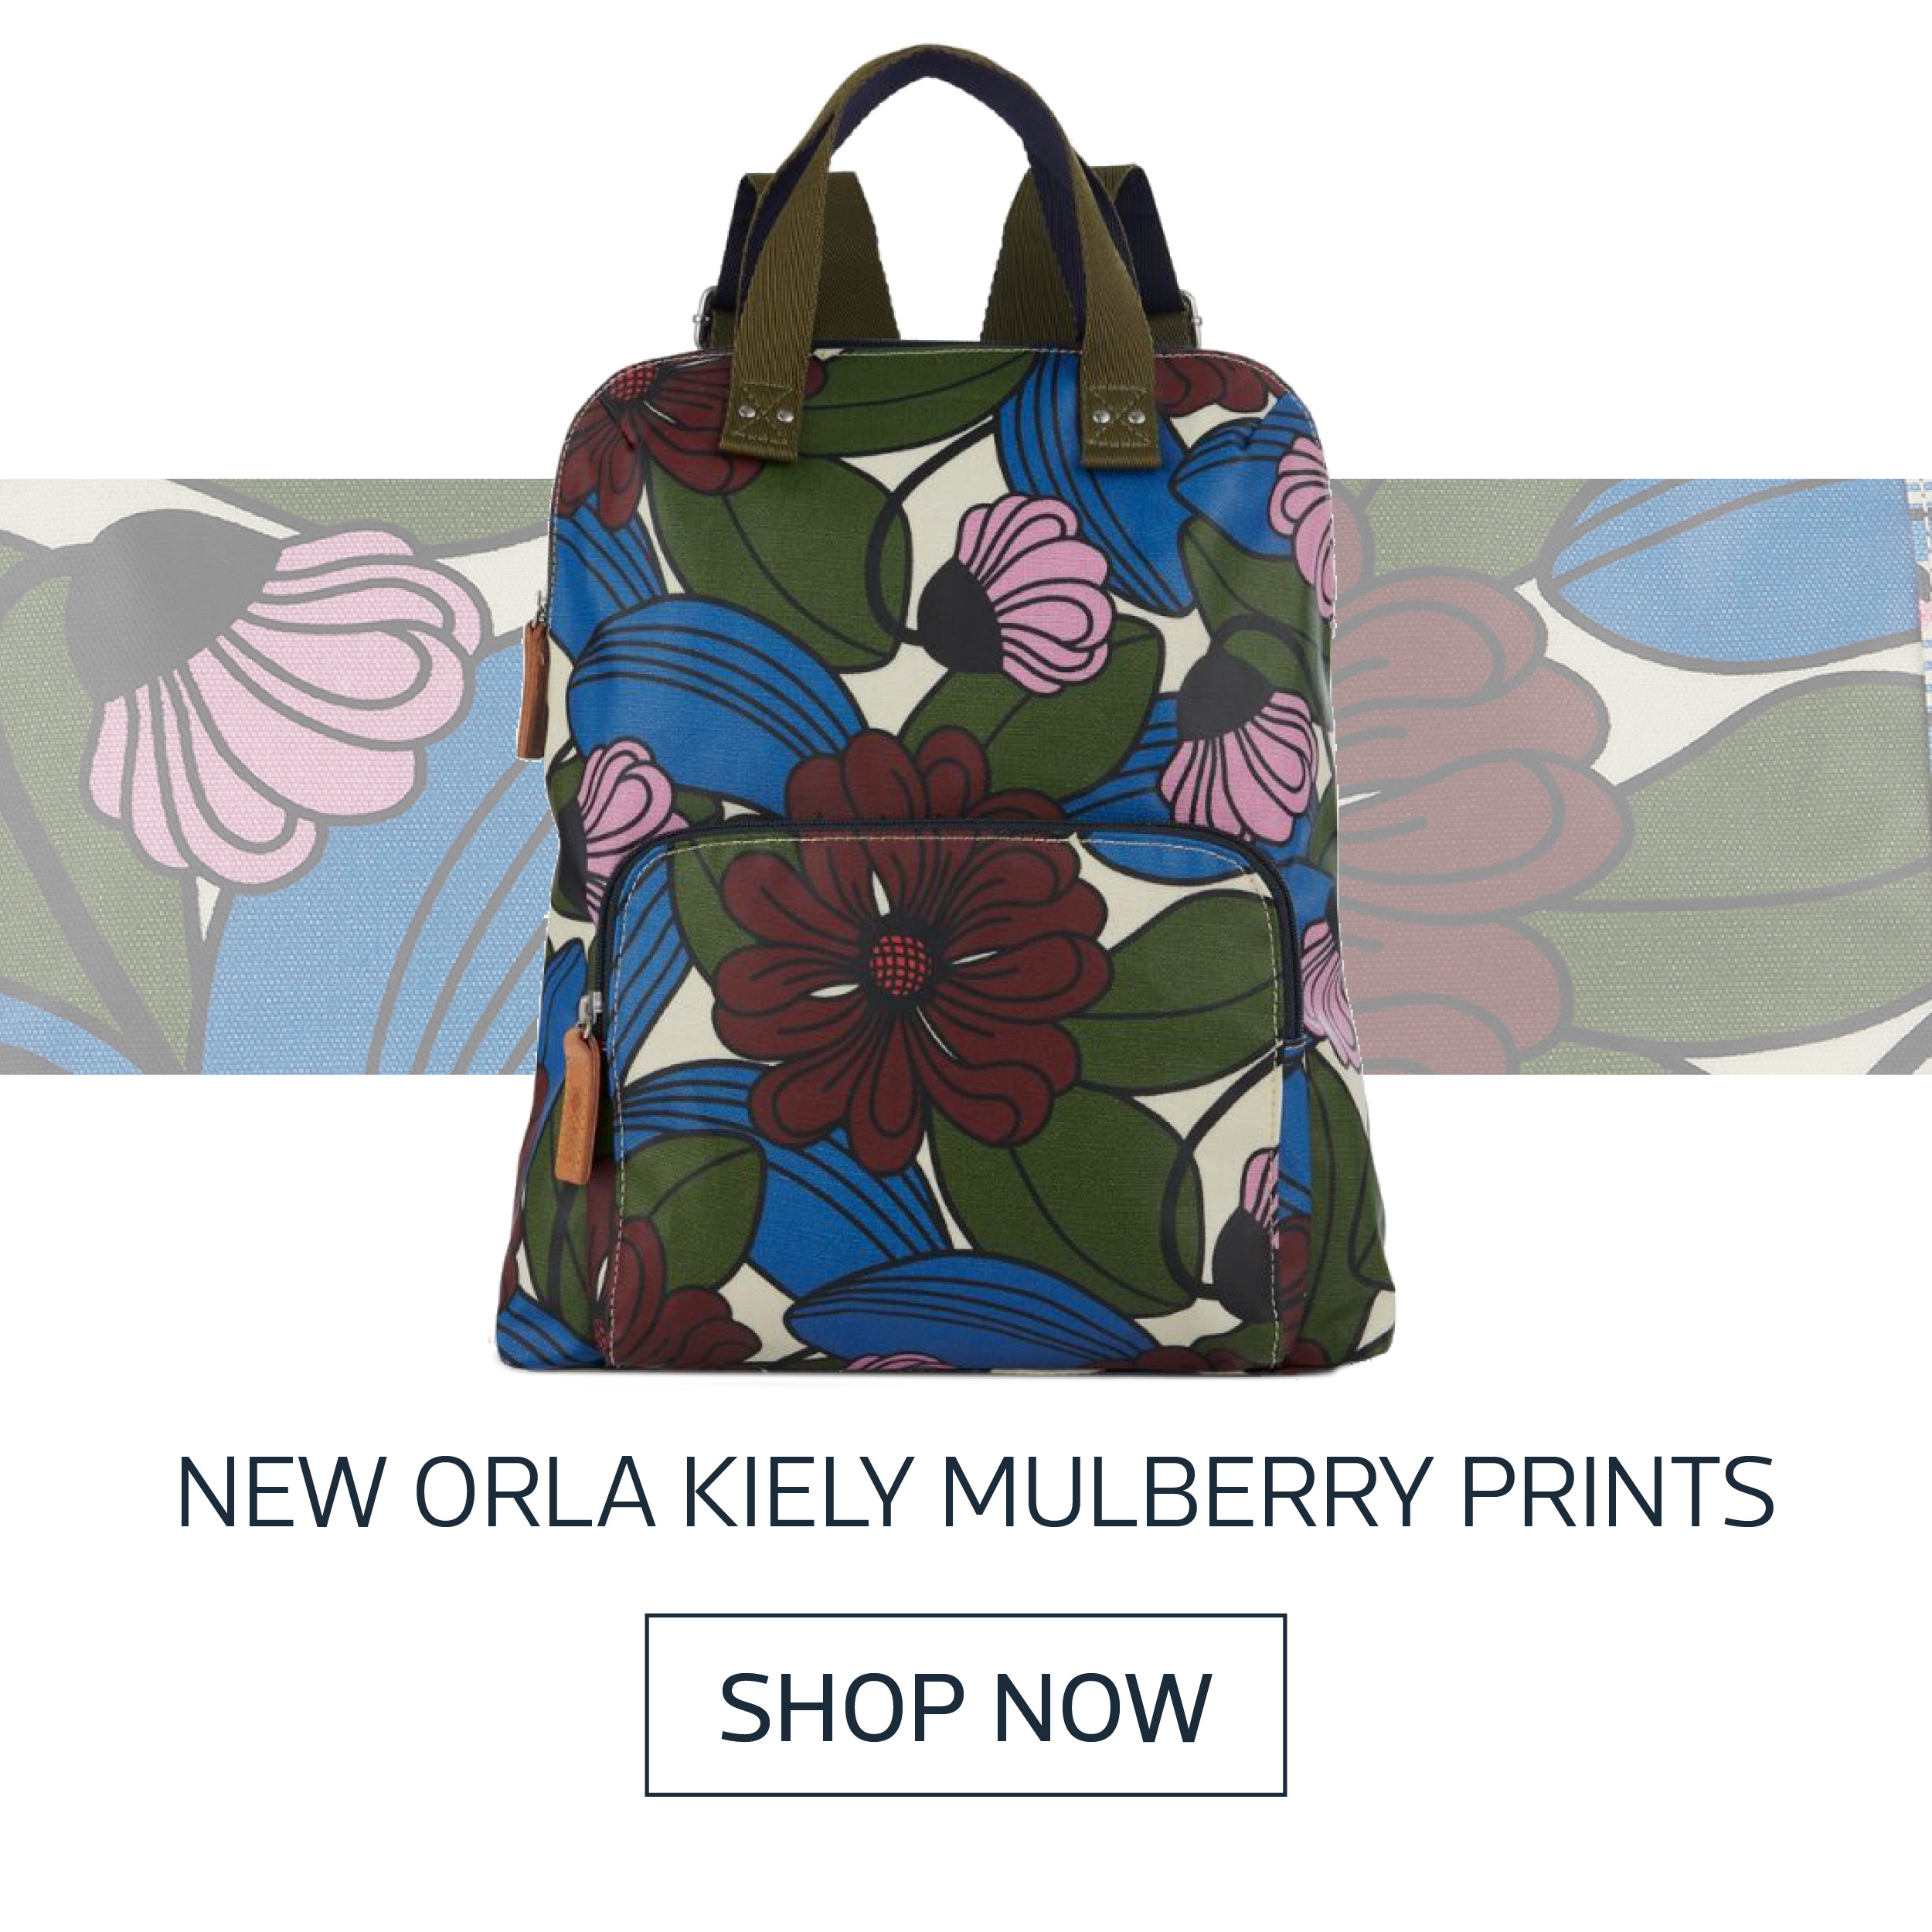 New orla kiely Mulberry prints